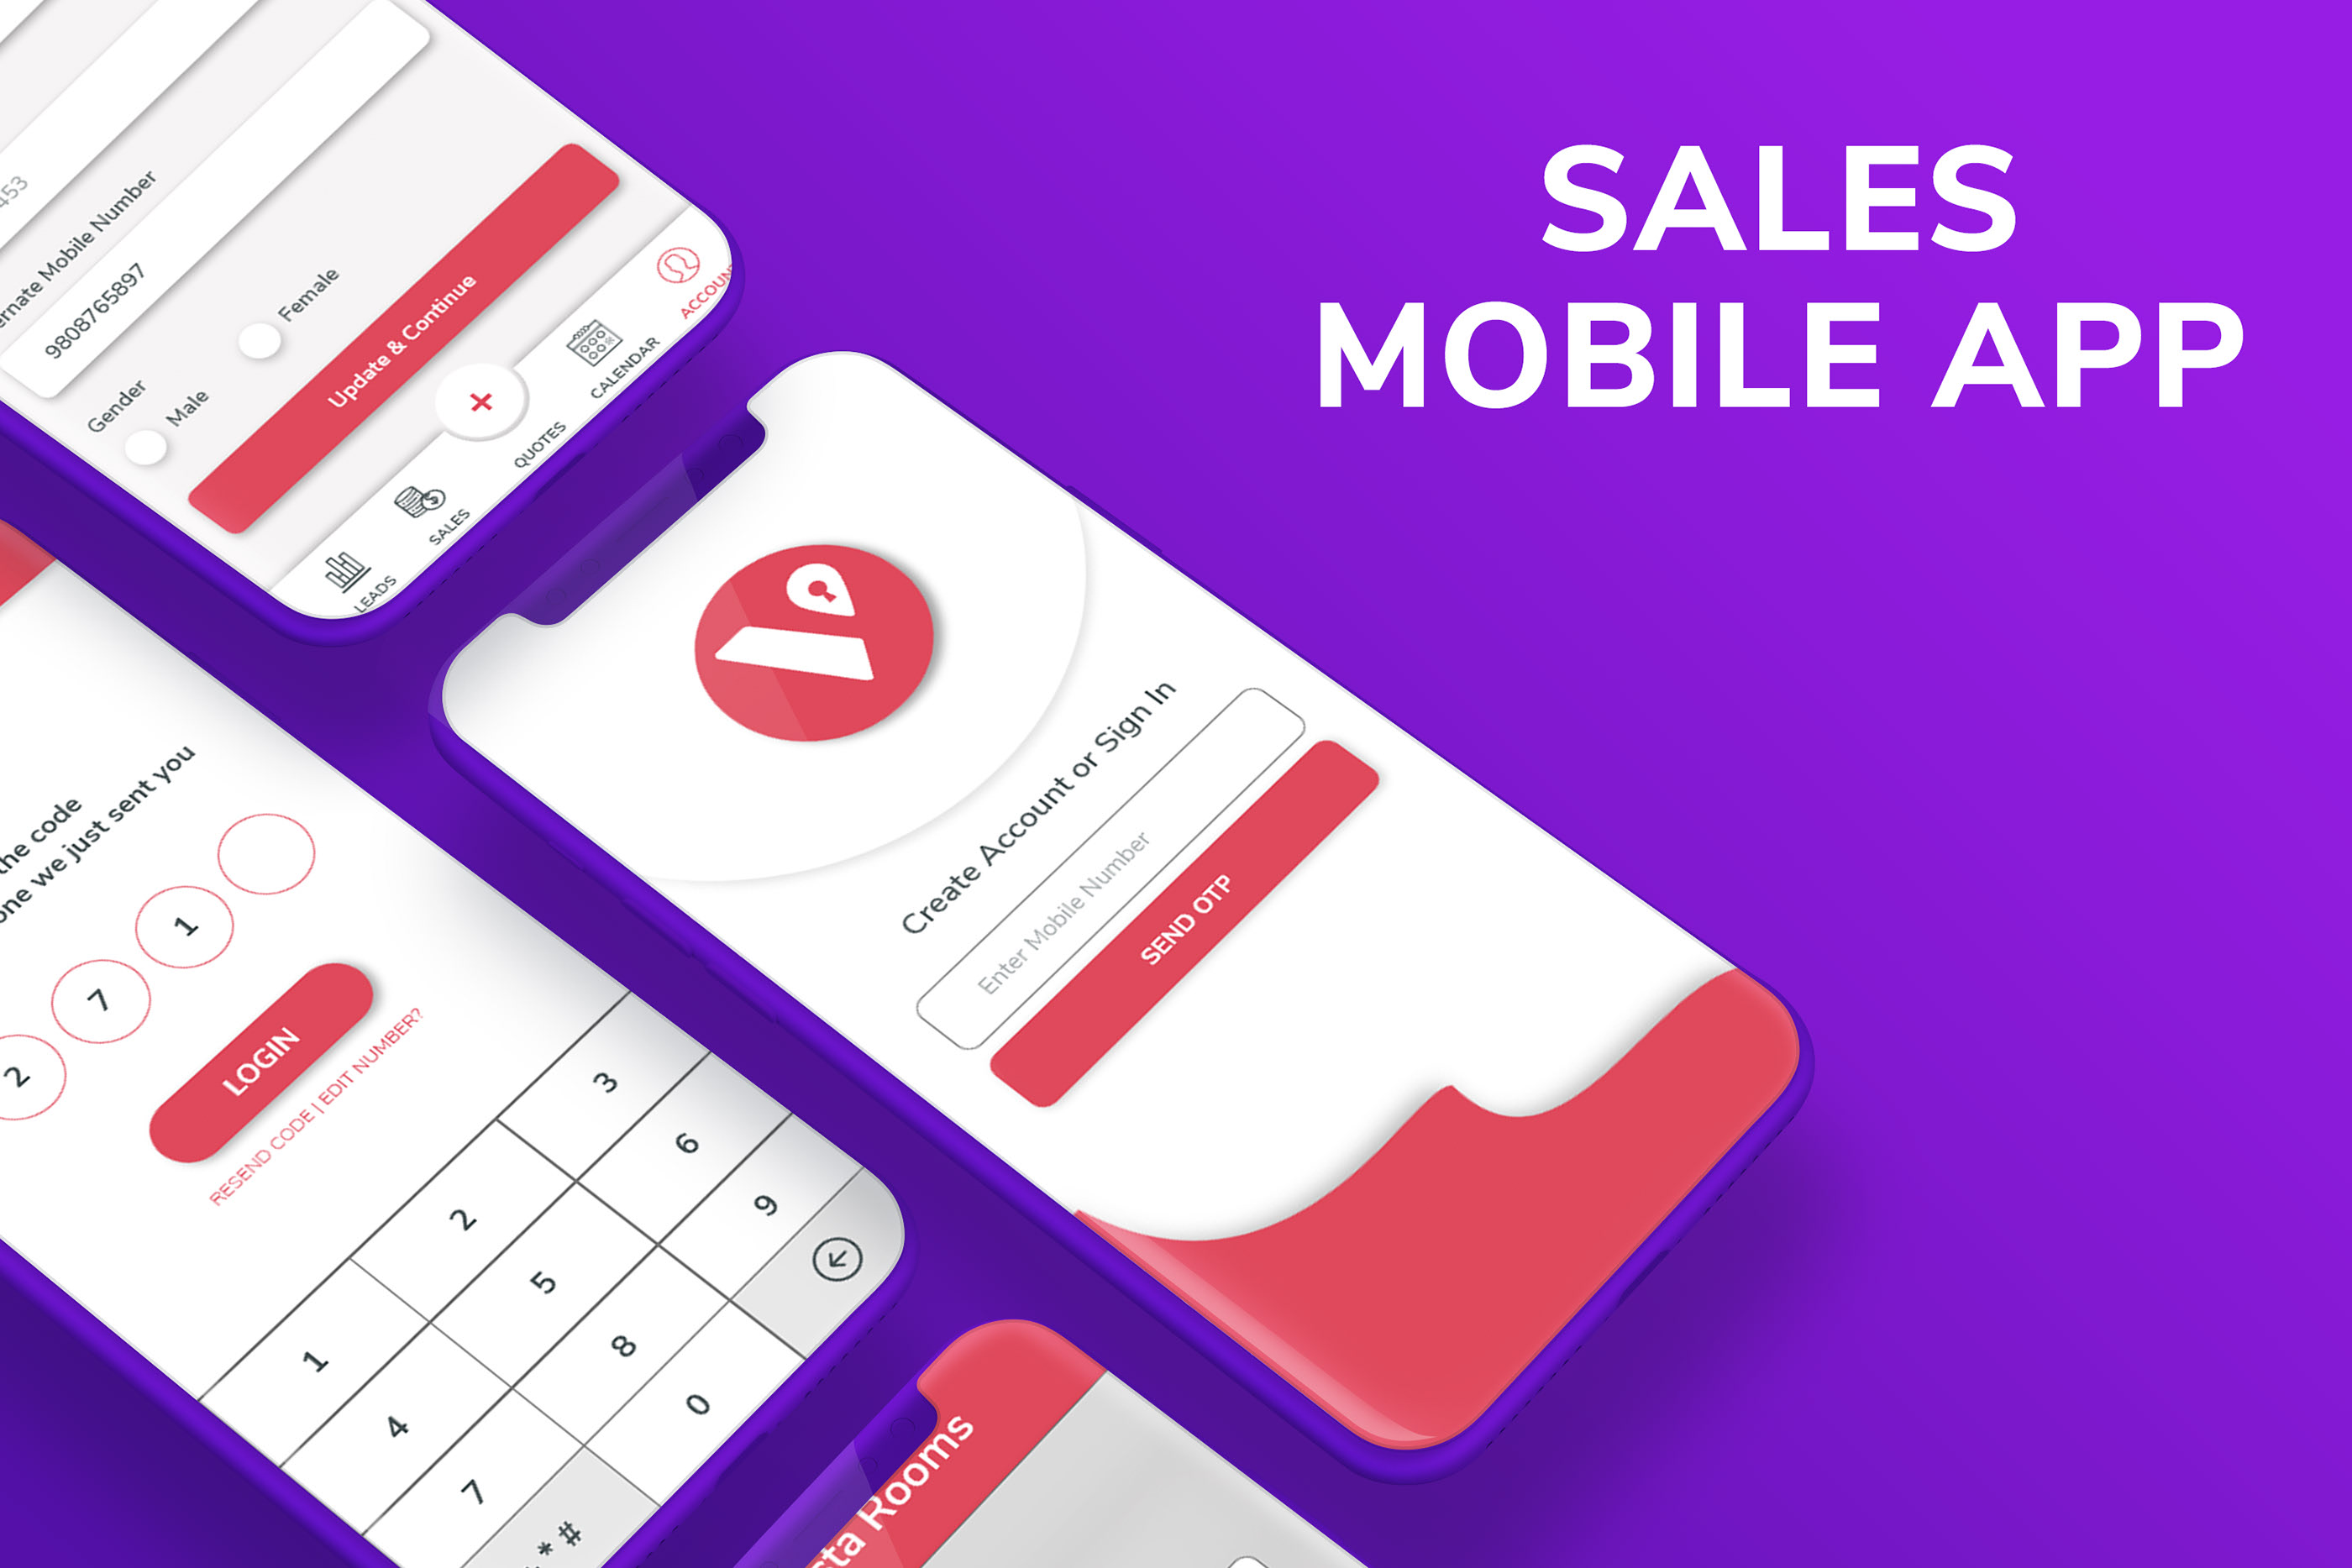 Mobile sales